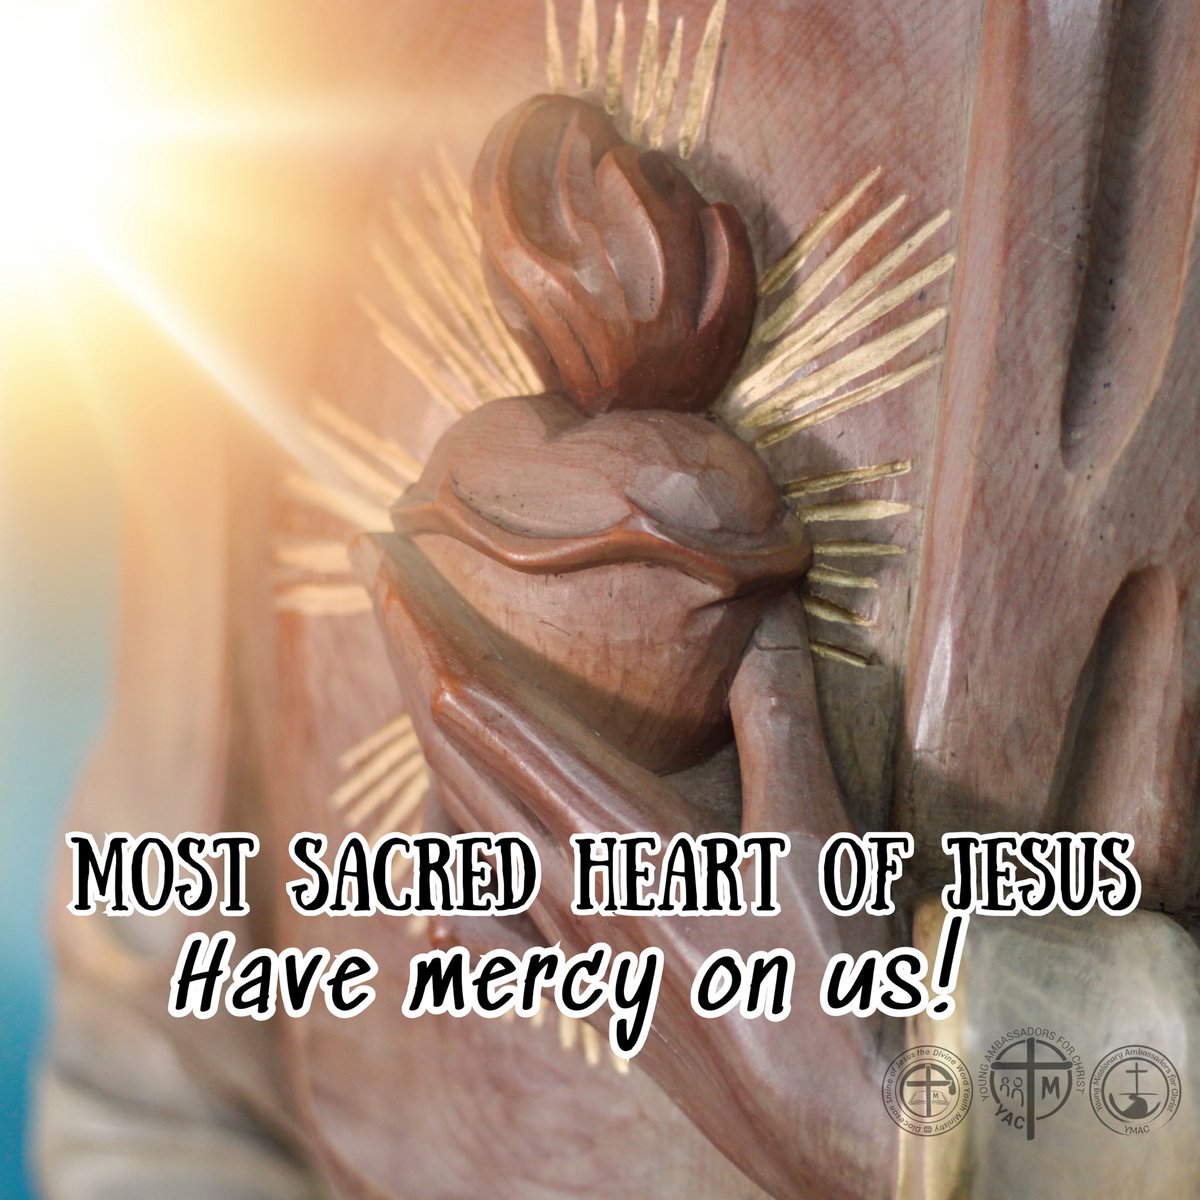 Sacred Heart of Jesus, we trust in You.

Most Sacred Heart of Jesus, Have mercy on us!

Amen.

#BeHumbleAndMeek #HeartOfJesus
#SacredHeartDay #HappyFeastDay
#SacredHeartOfJesus #DivineHeart

***

#YAC #YMAC #SYM #SVDyouth 
#SHRINEyouthMinistry #ShrineYouth